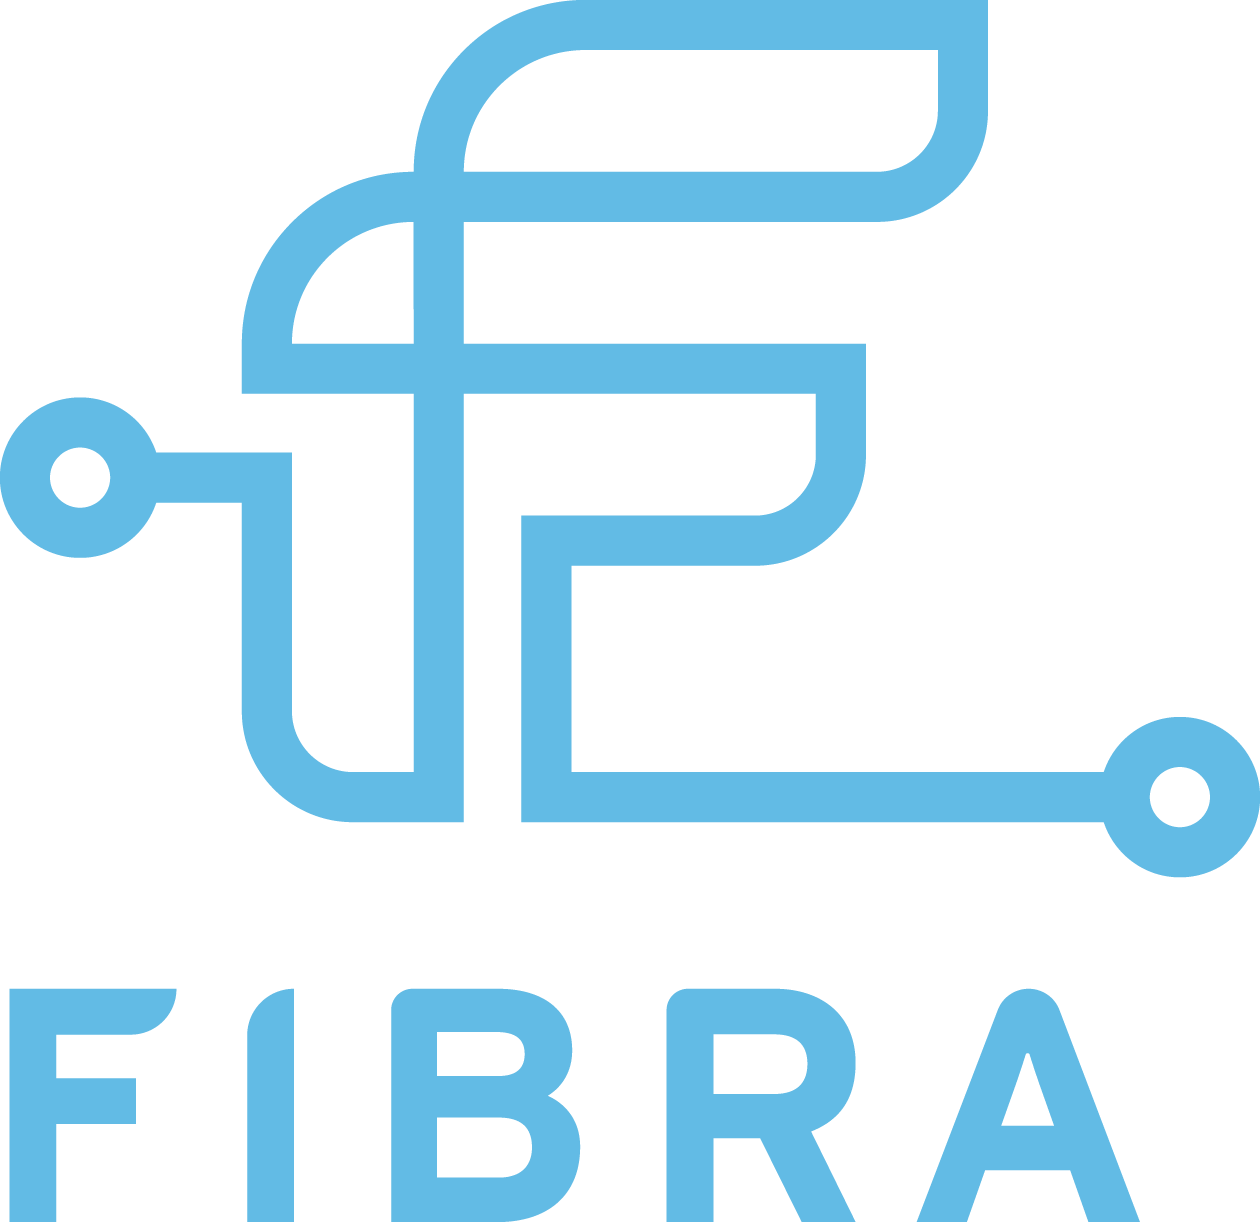 Fibra logo